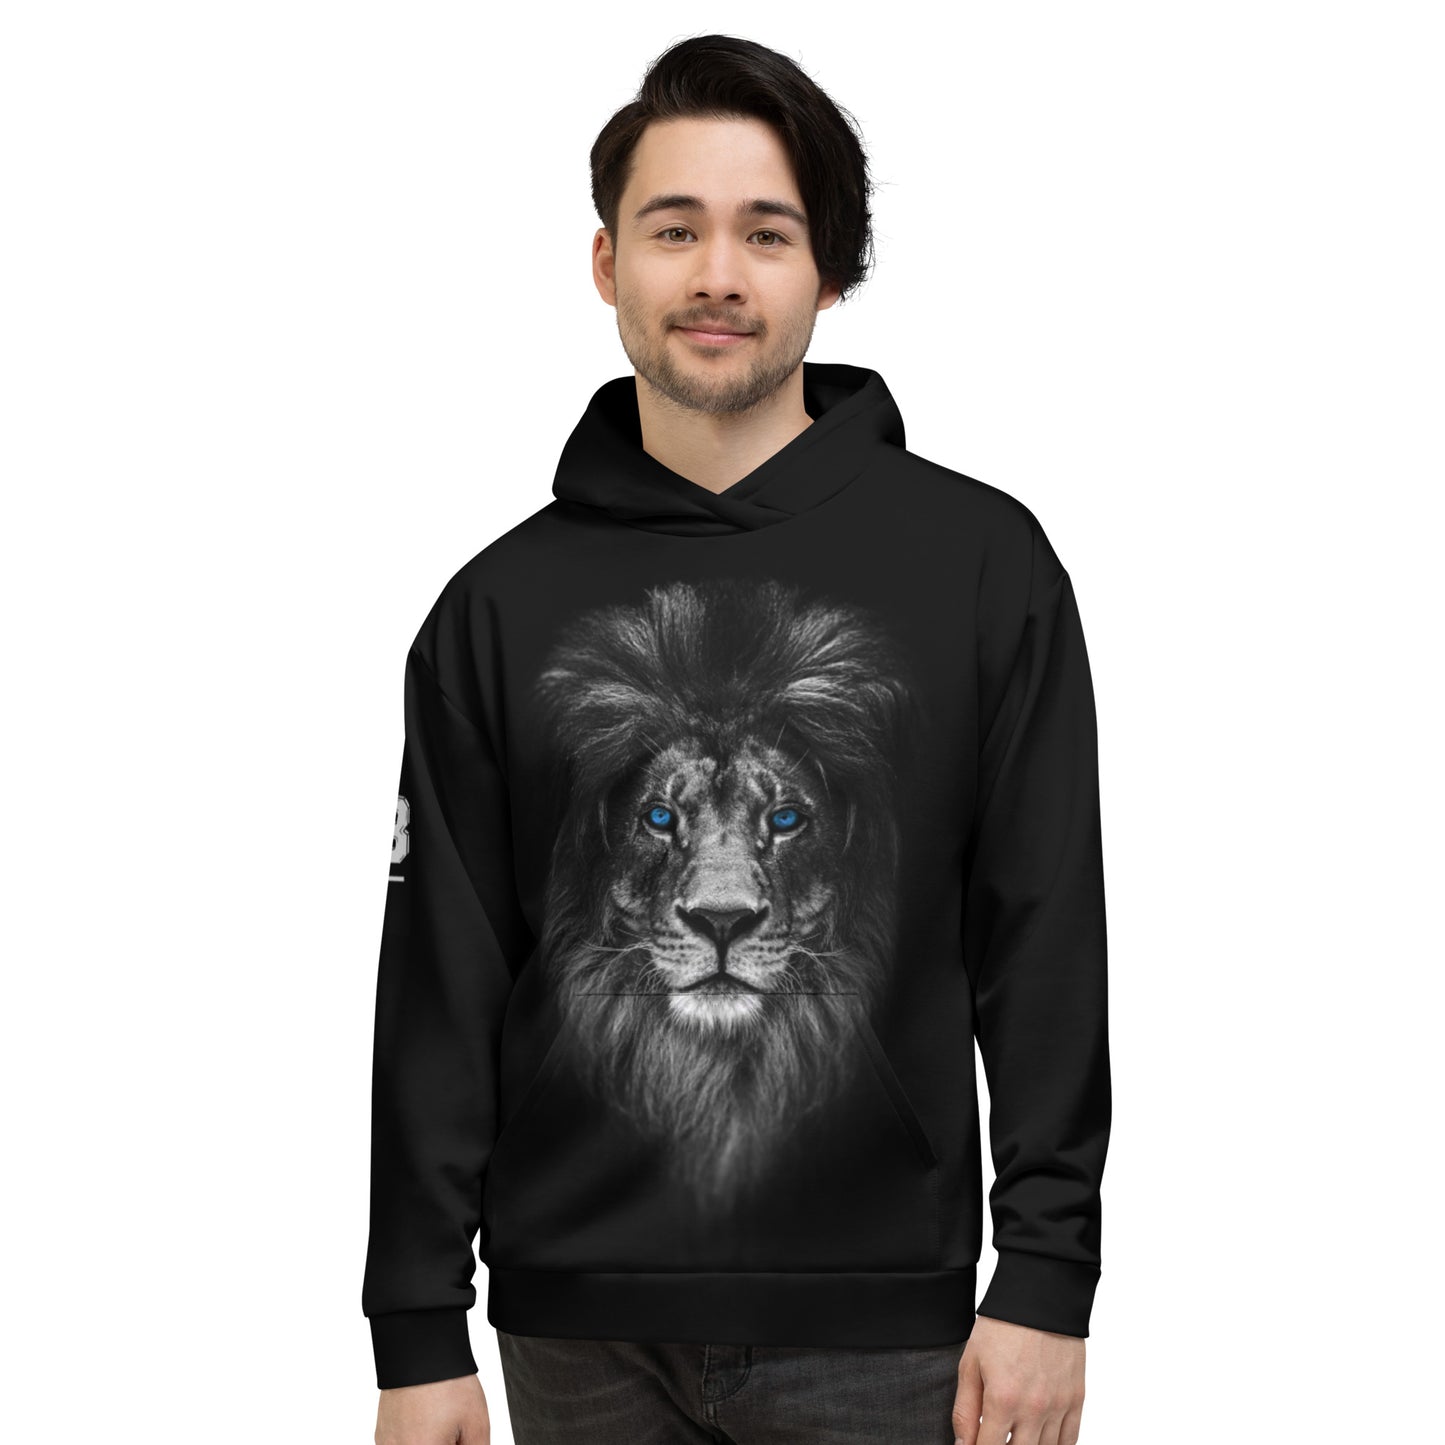 The Lion - 313 TUFF hoodie